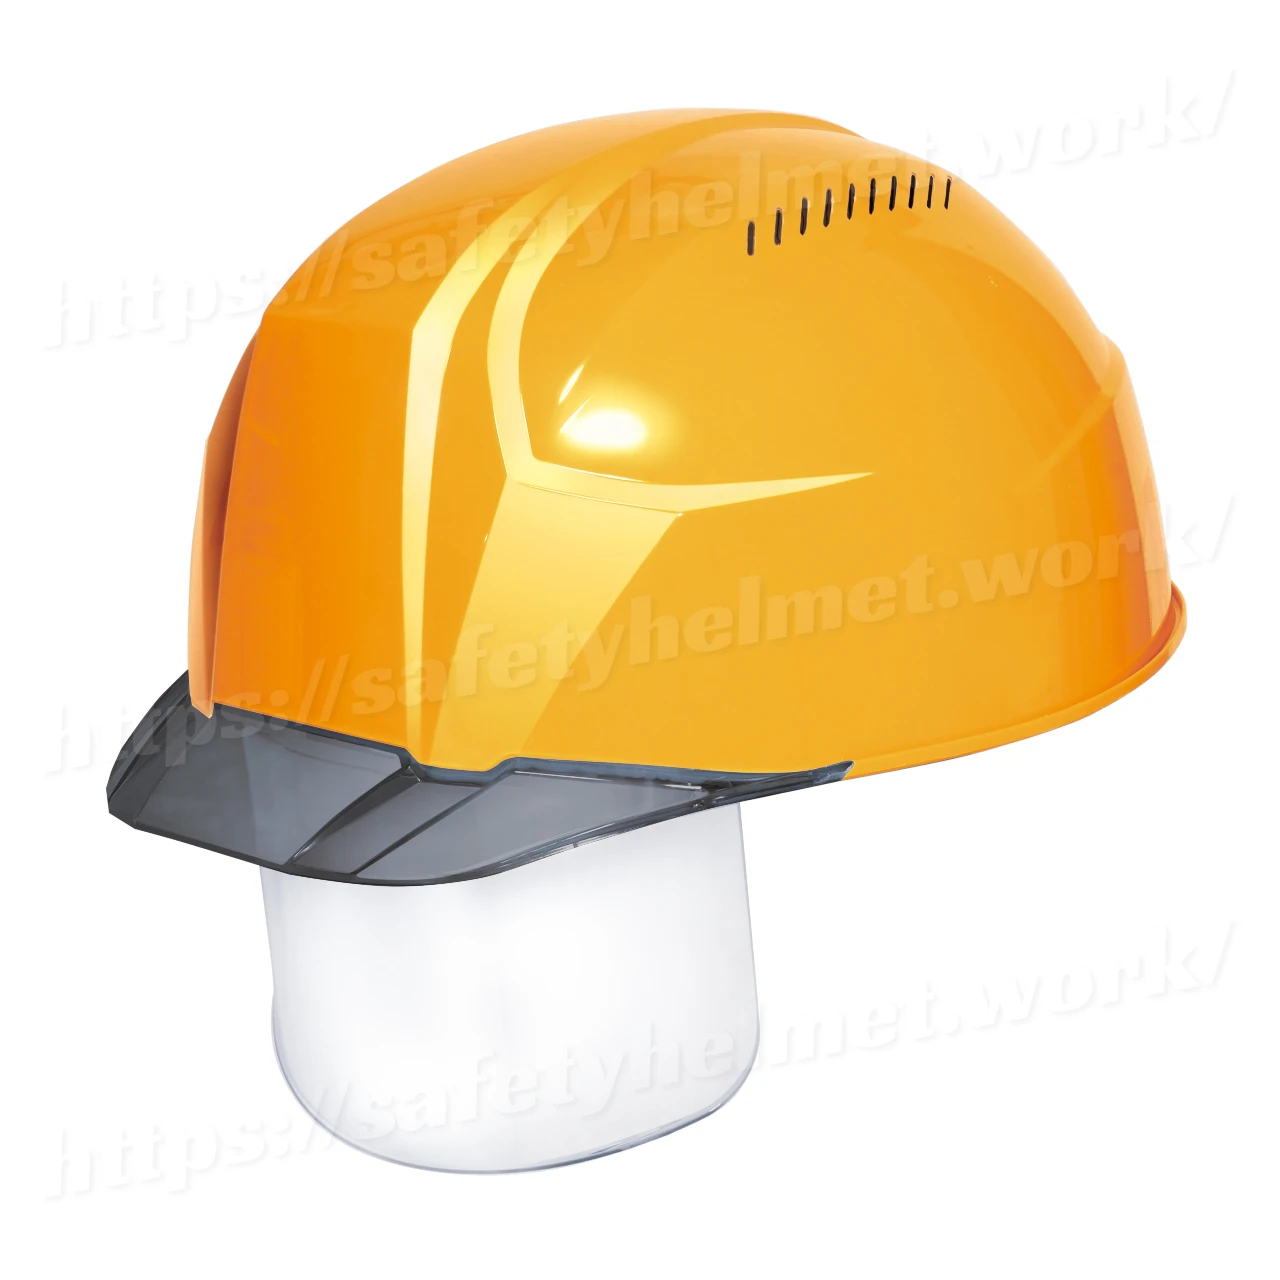 dic-lightest-helmet-keijin-shield-aa23csv-yellow-smoke